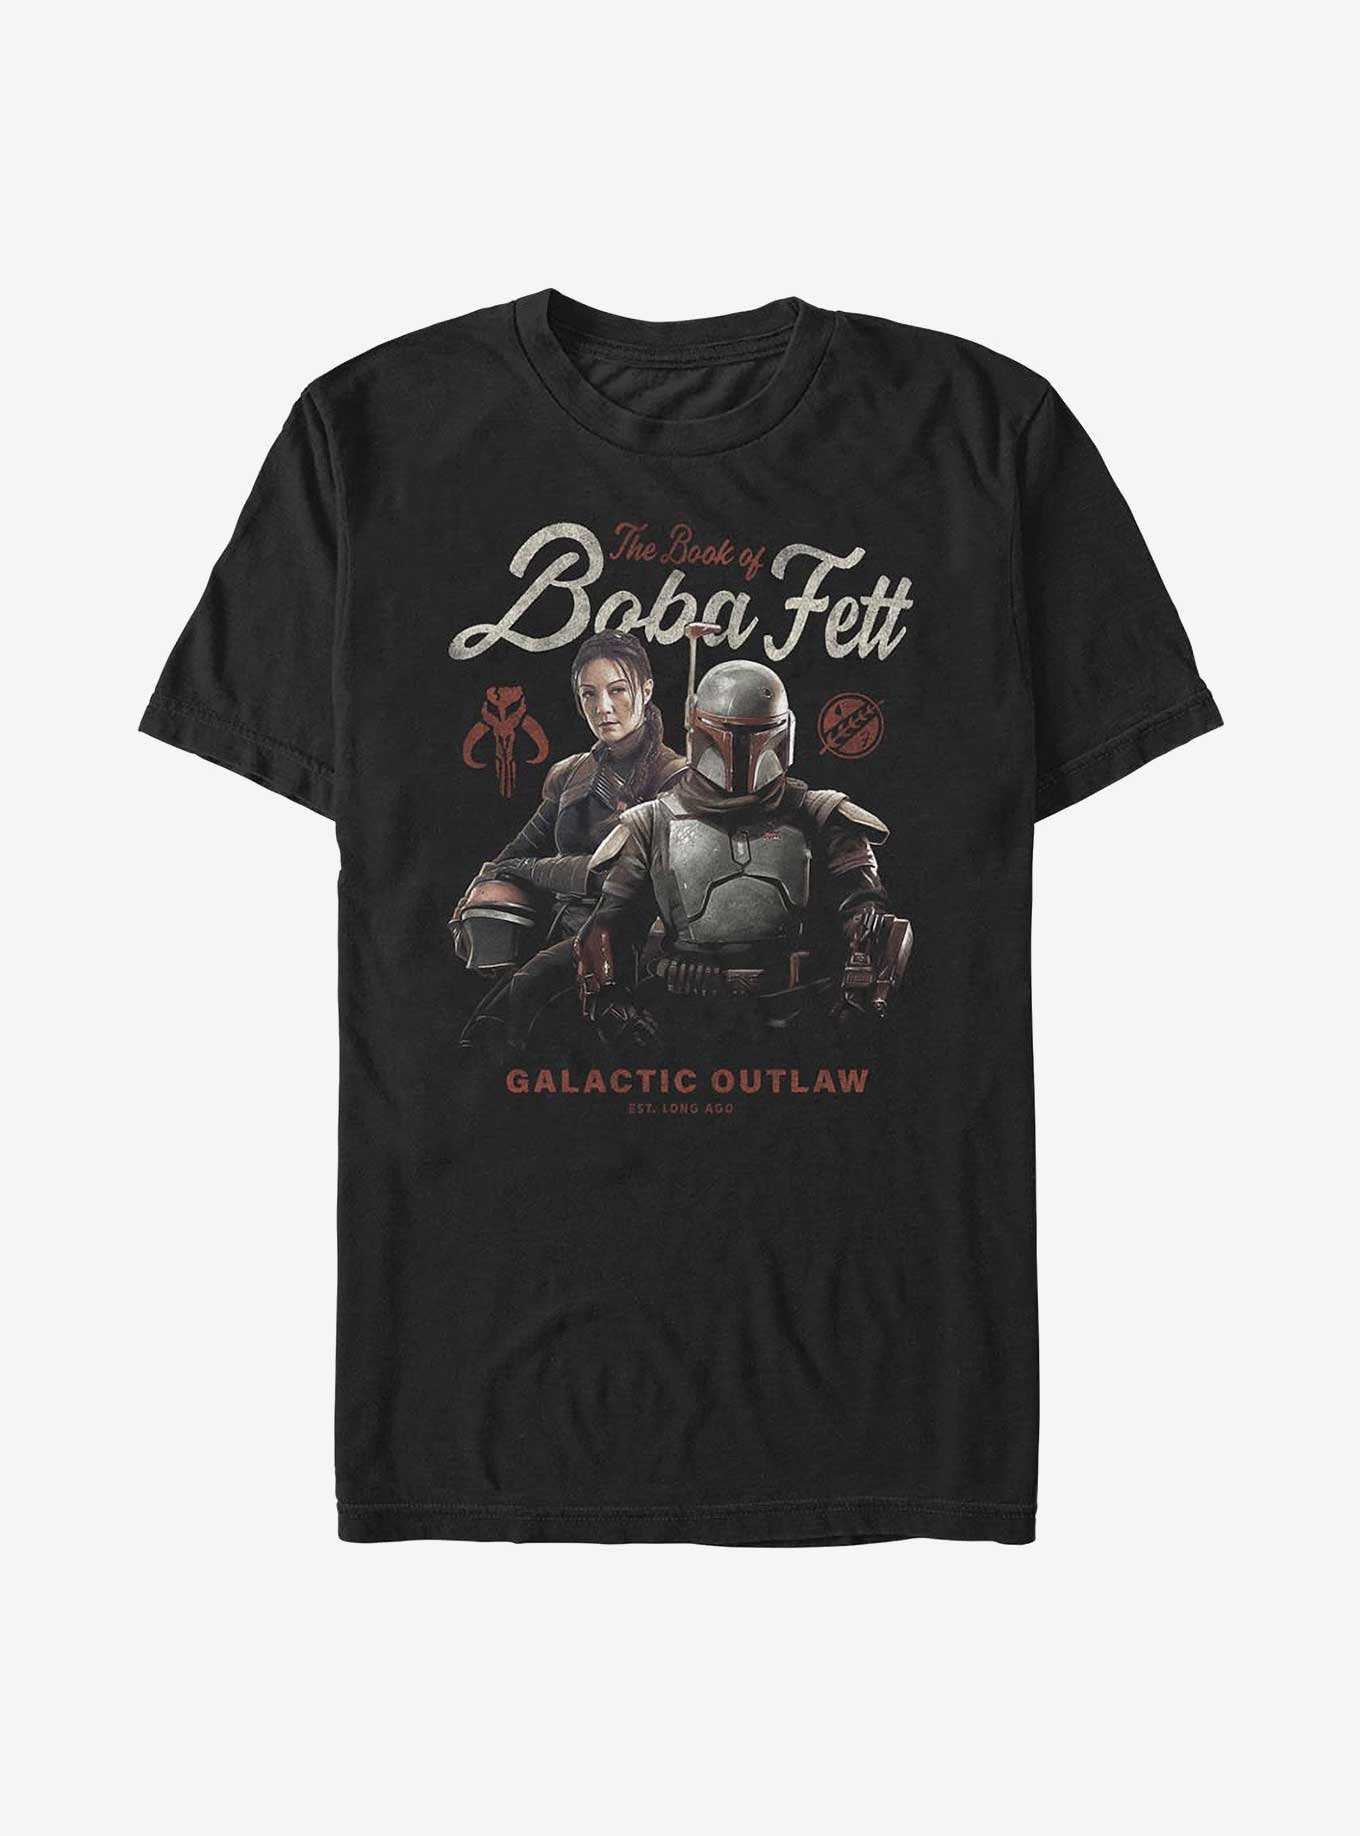 Star Wars: The Book Of Boba Fett Galactic Outlaw Established Long Ago T-Shirt, , hi-res